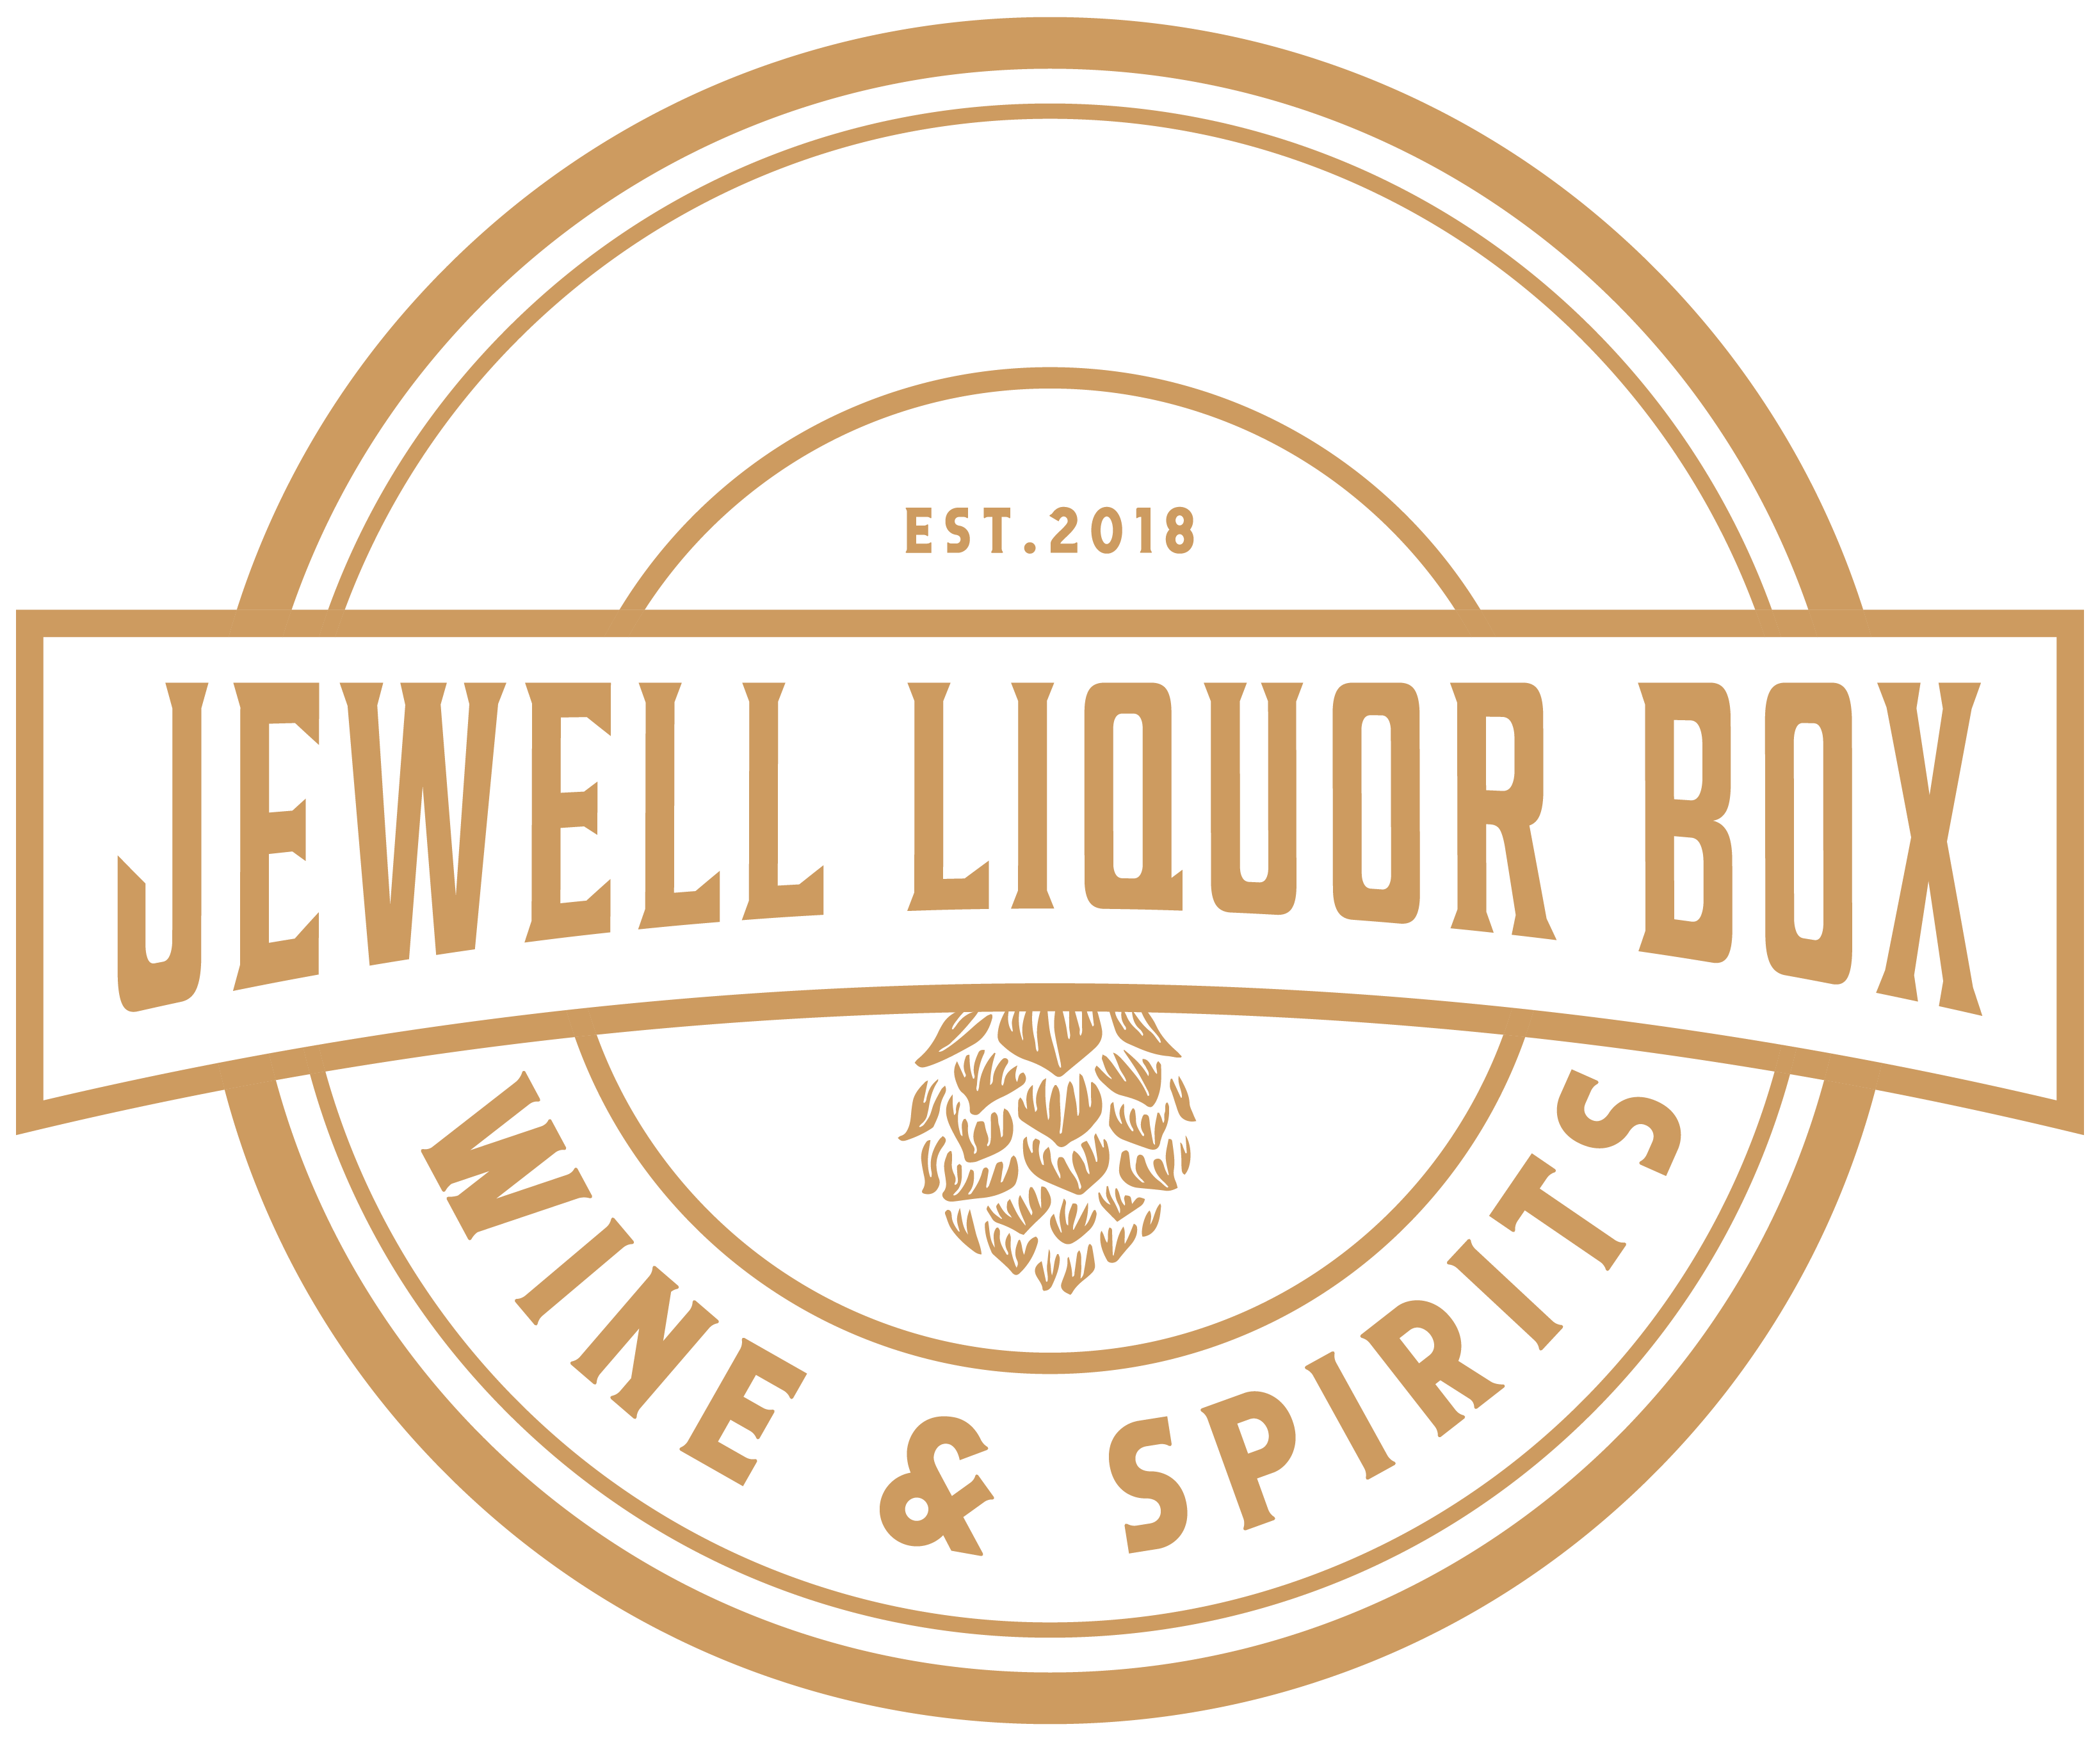 Jewell Liquor Box